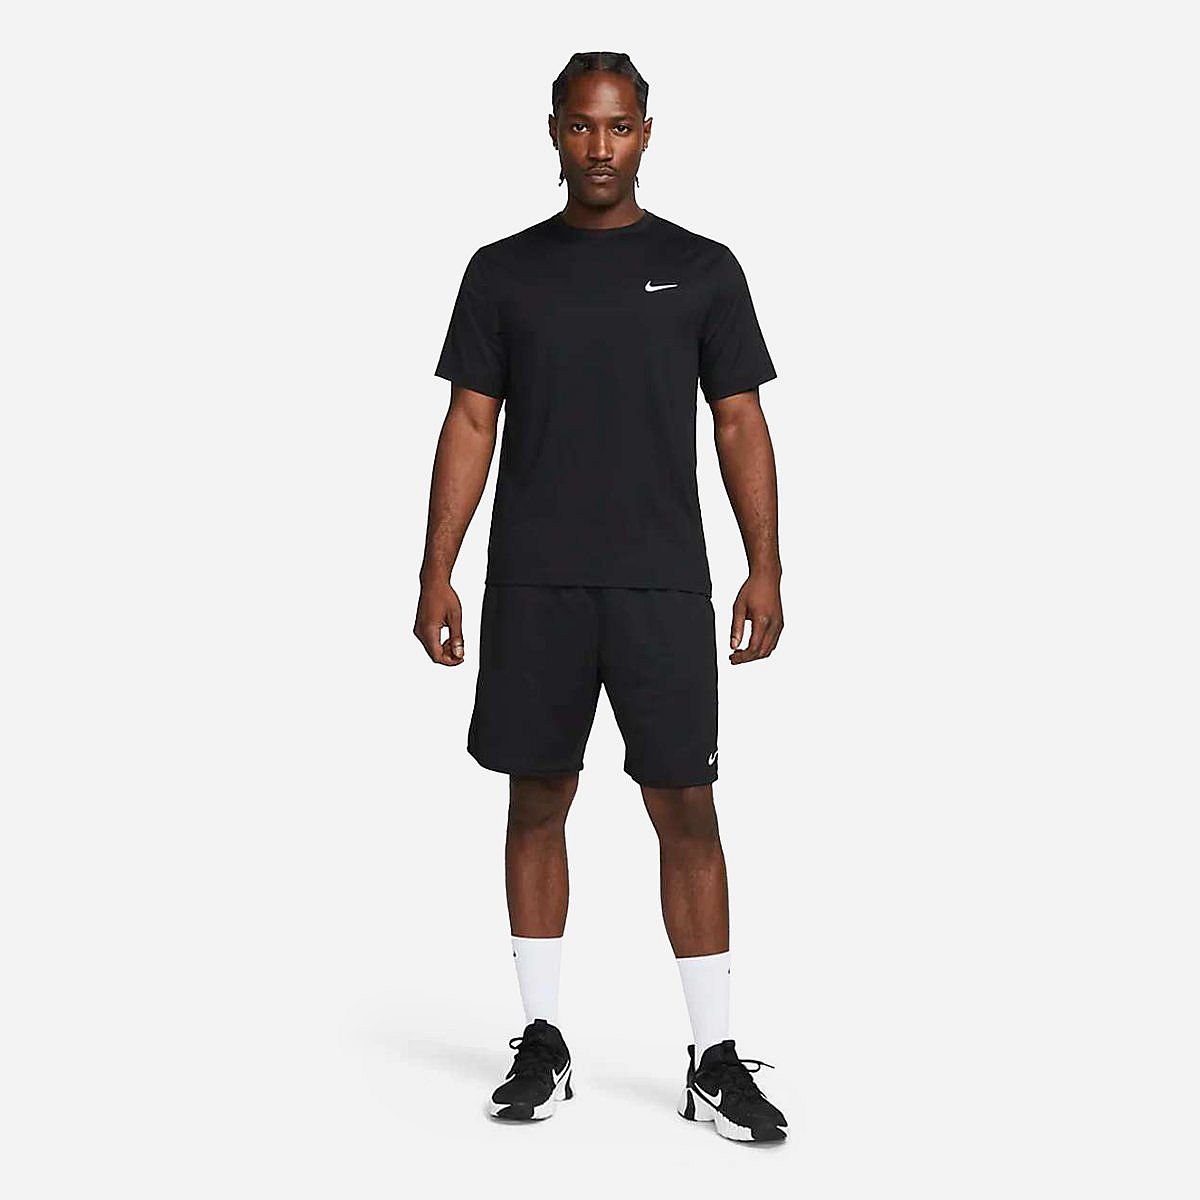 AN298380 Nike Dri-fit Uv Hyverse Men's Short